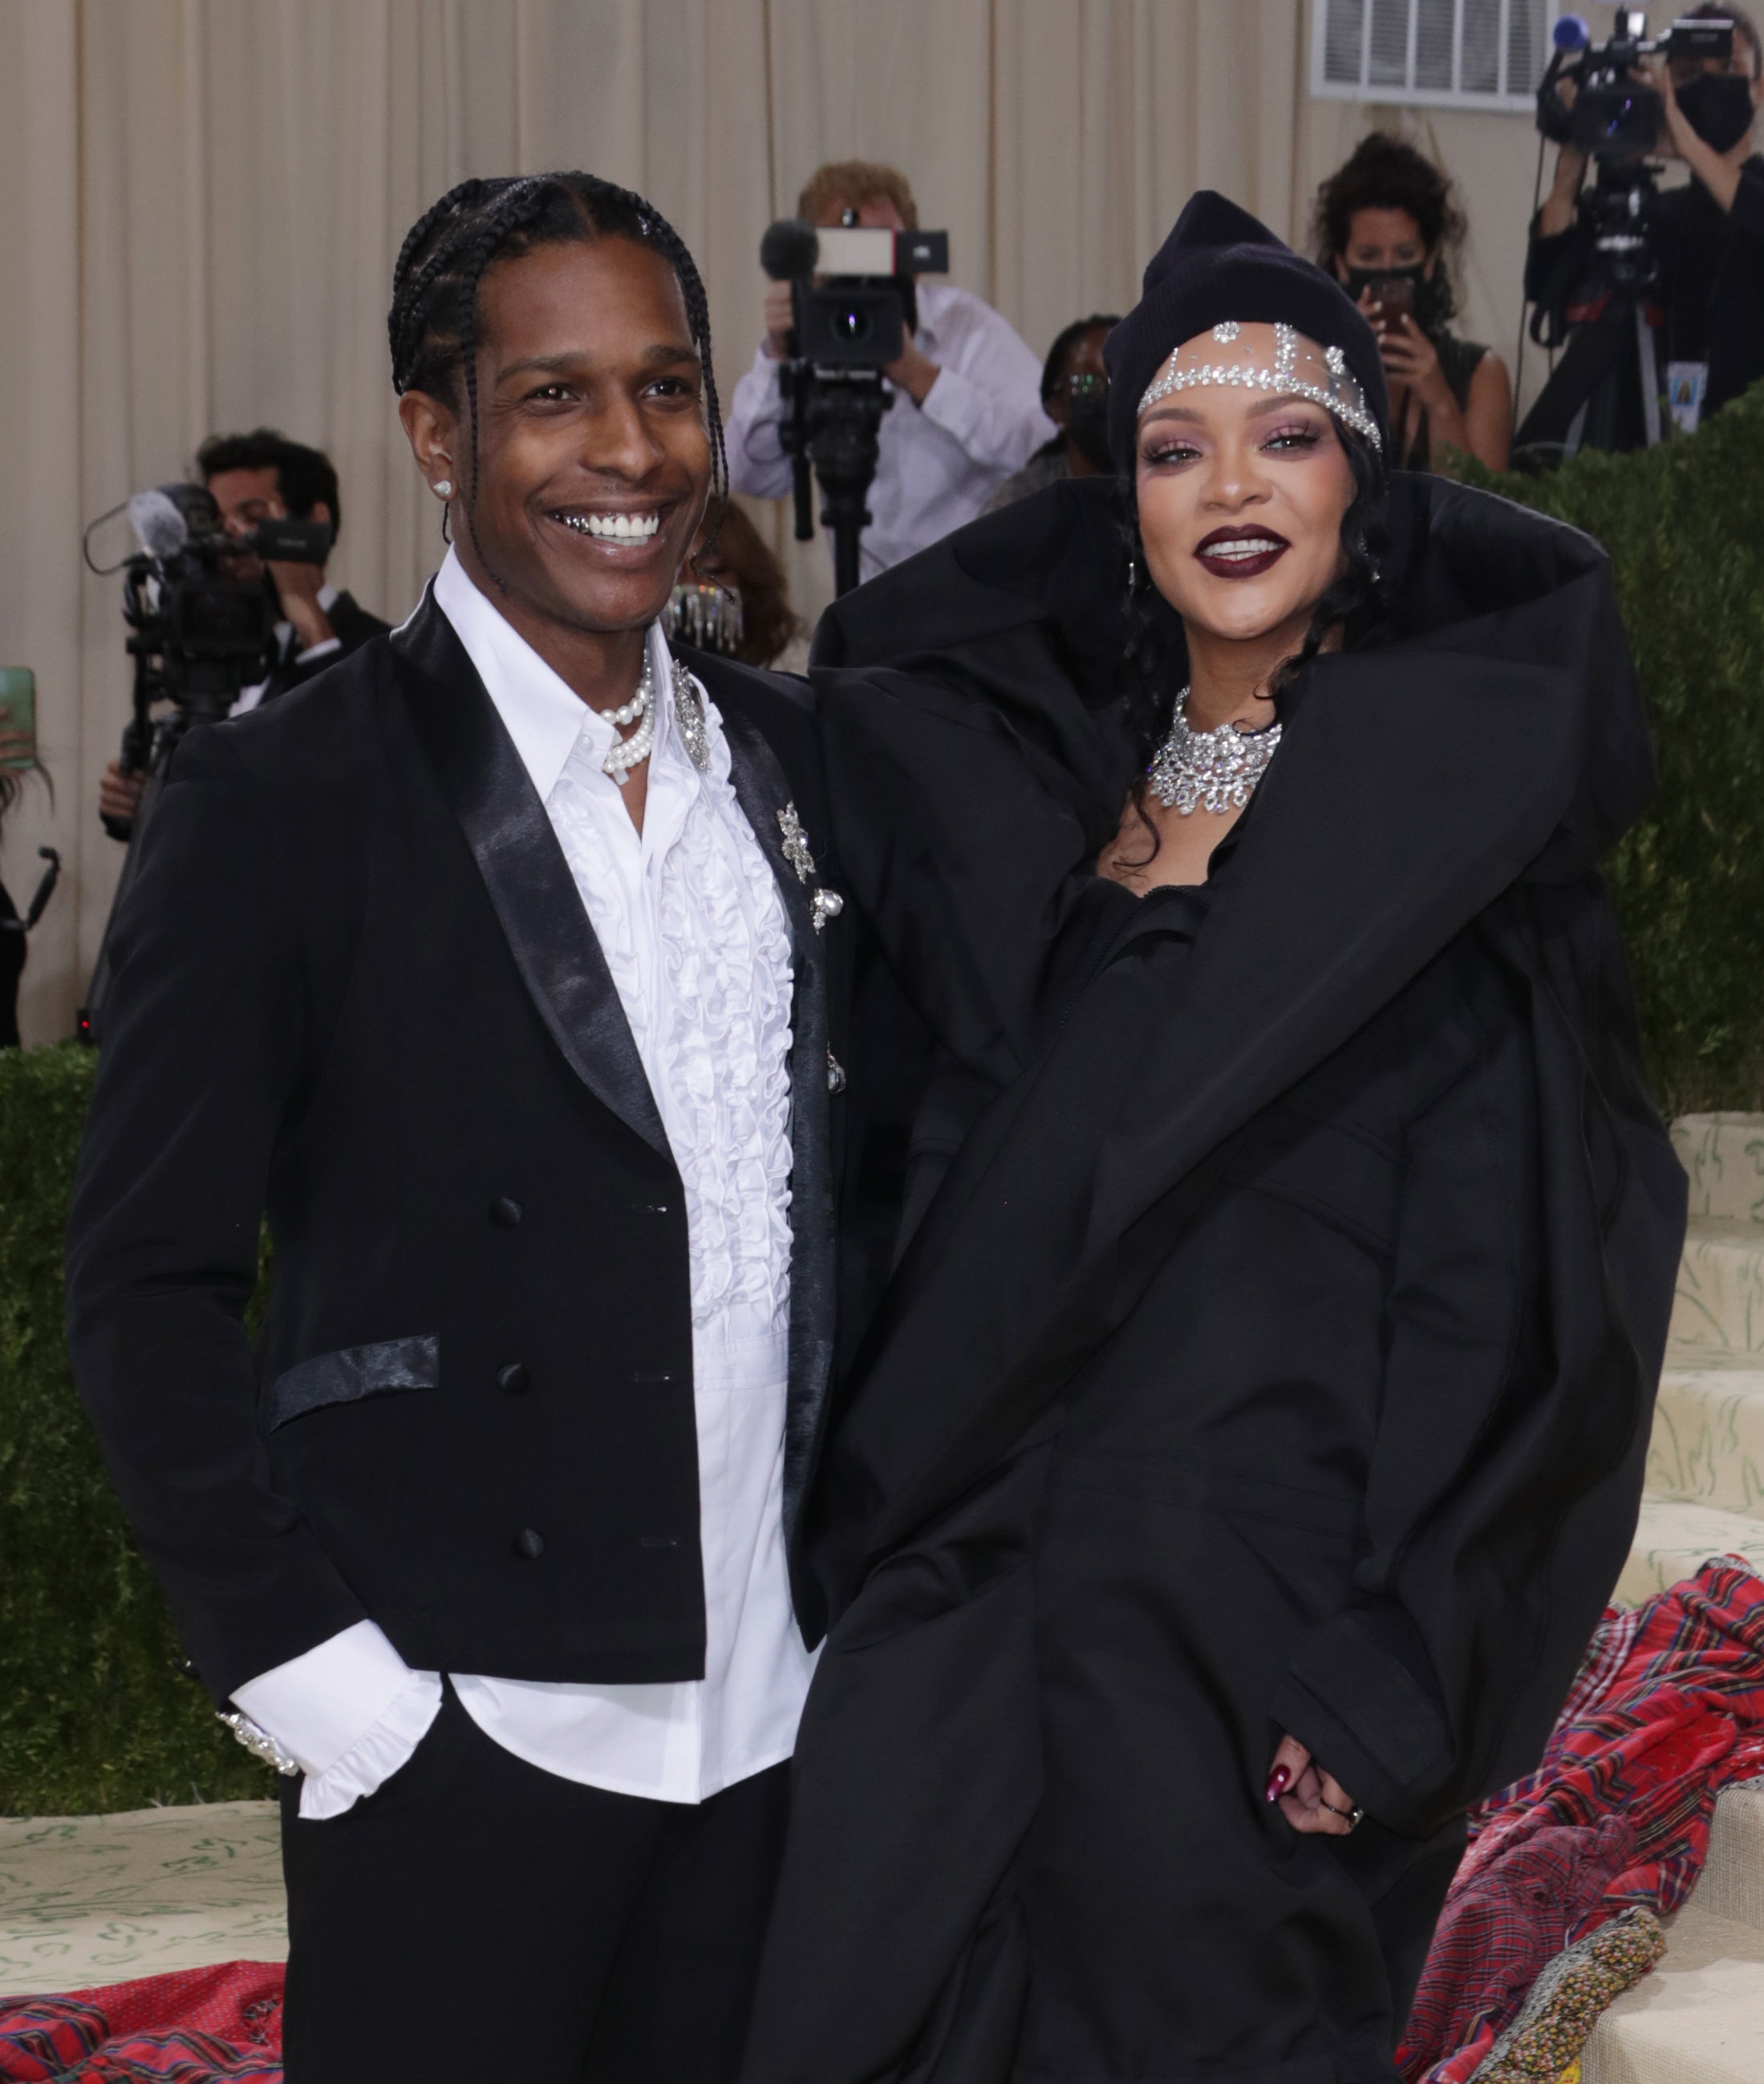 Rihanna, ASAP Rocky Are 'More in Love' Amid Baby No. 1 Pregnancy